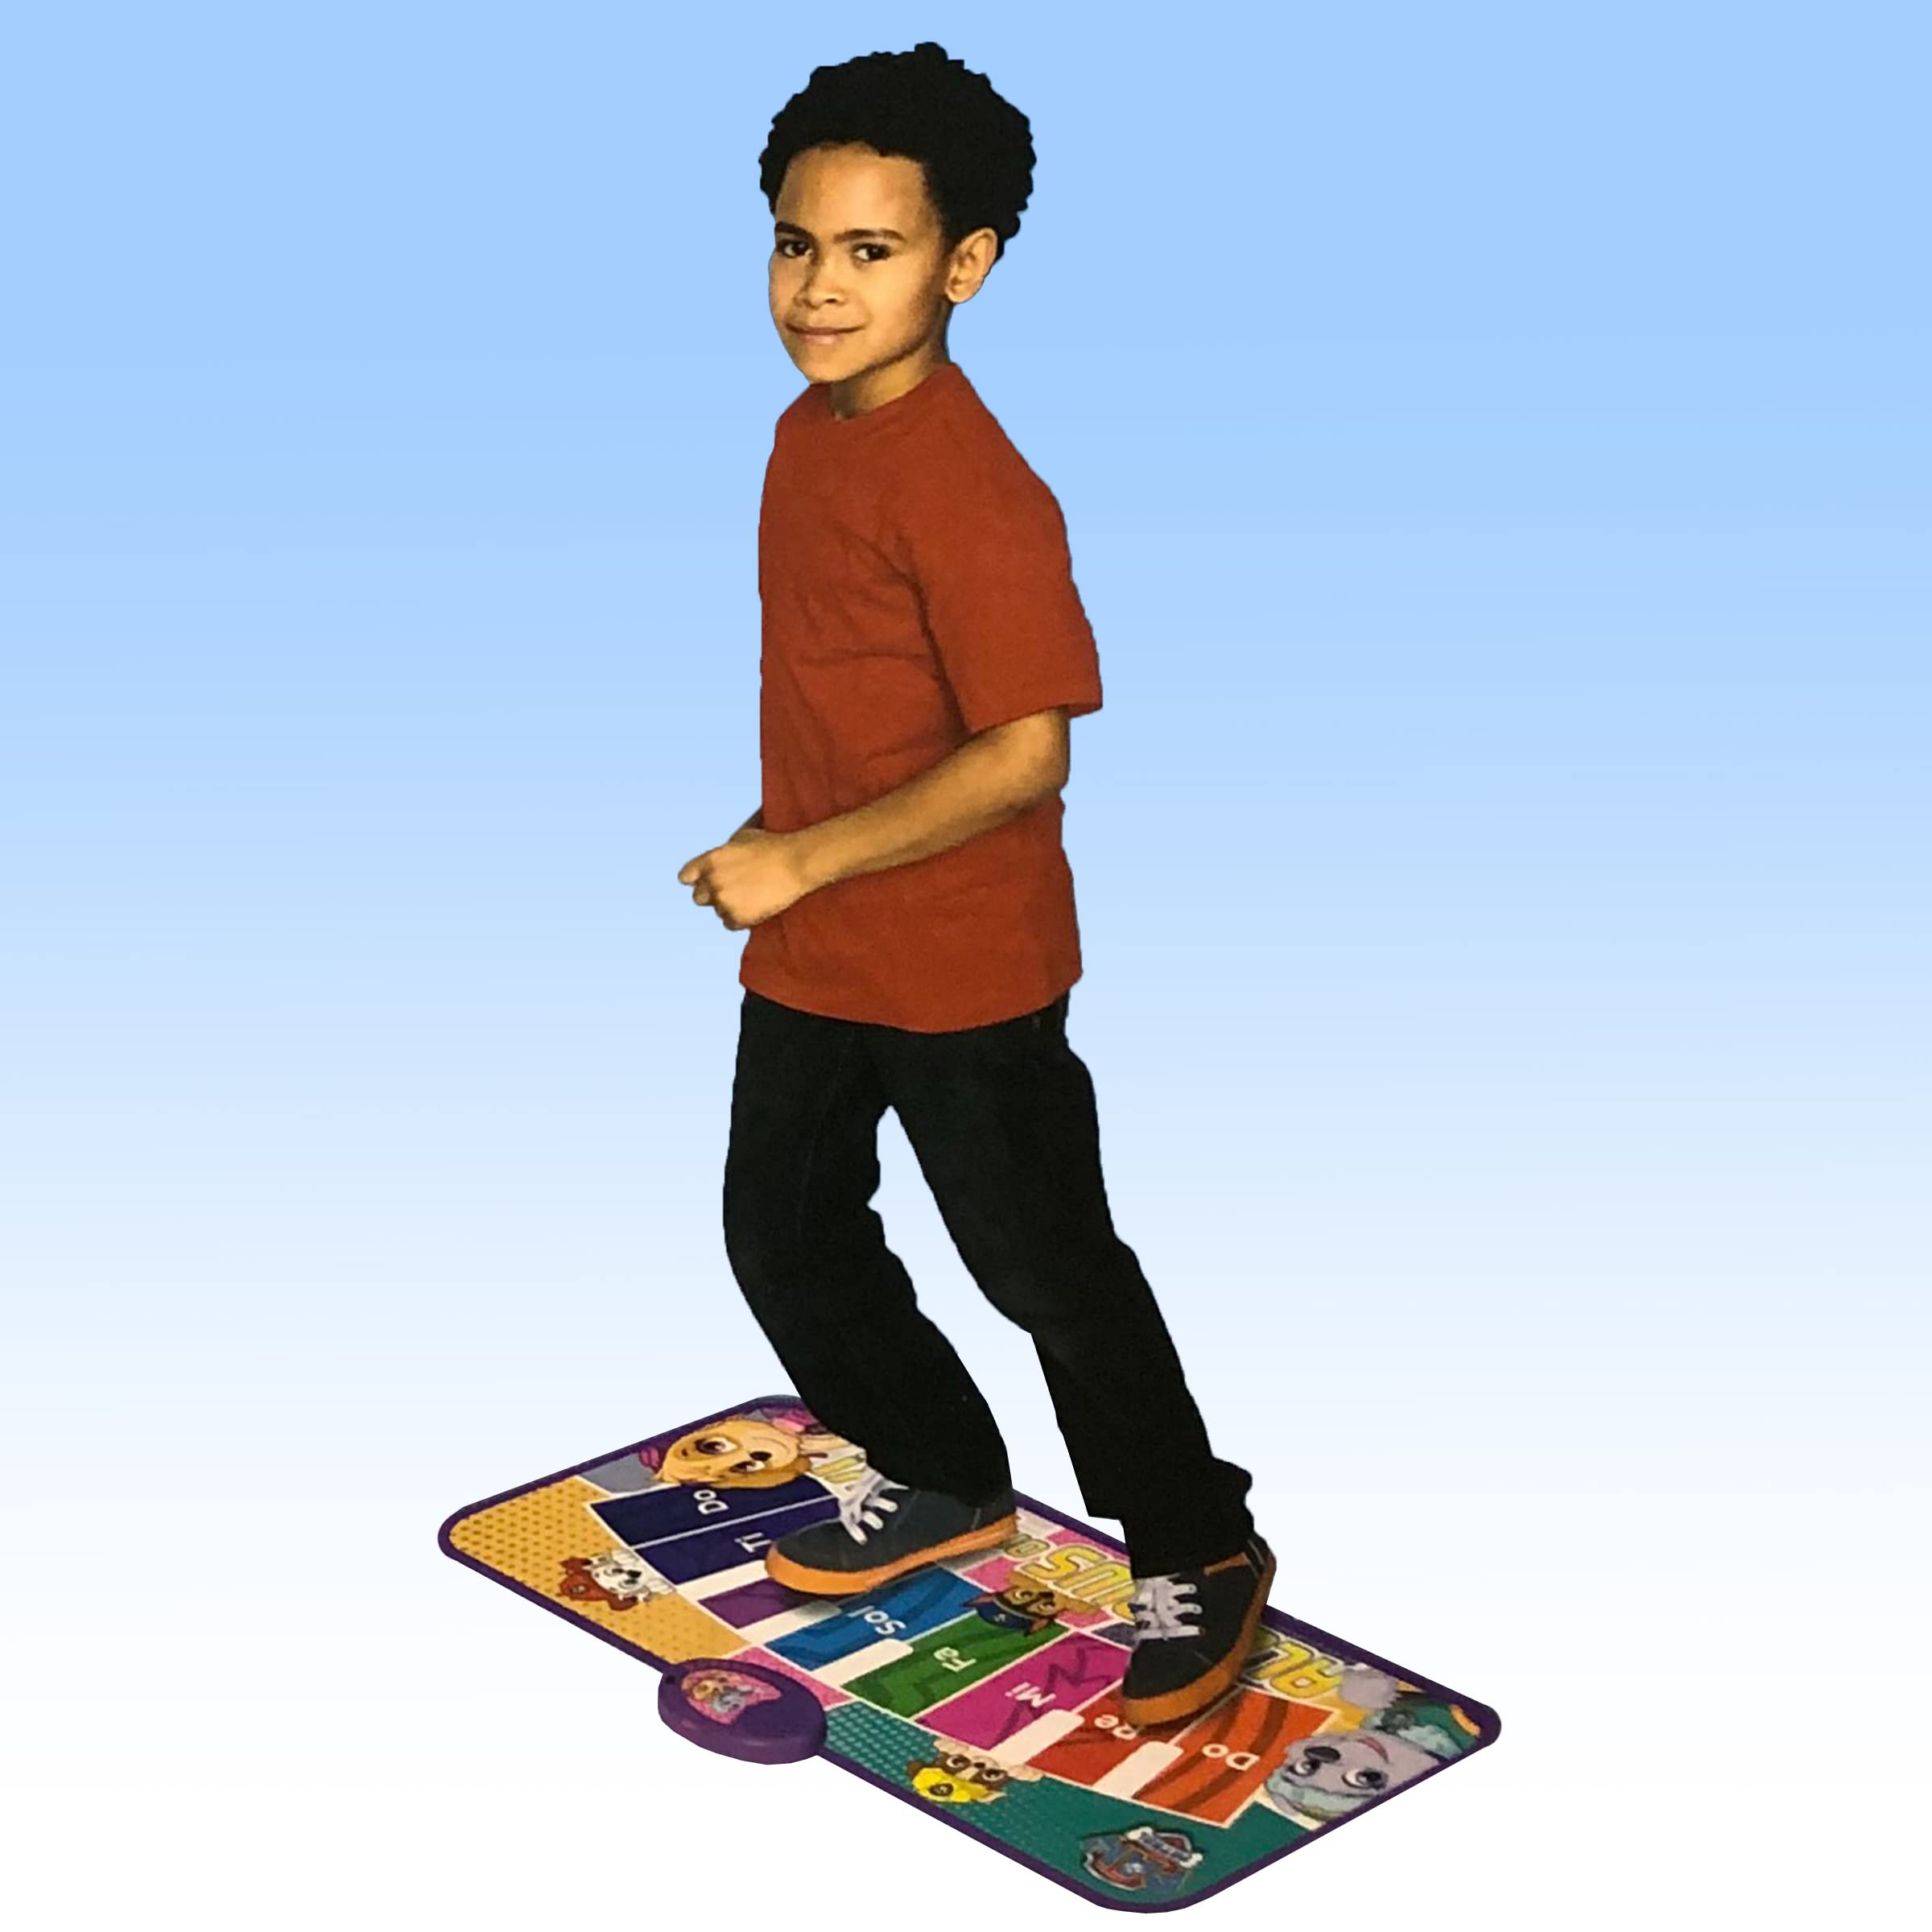 Sakar Paw Patrol Electronic Piano Music Mat TOY-15371 | Keyboard Piano Floor Mat for Kids, Light-Up Activity Mat, Dance Floor Rhythm Games, Educational Kids Music Playmat